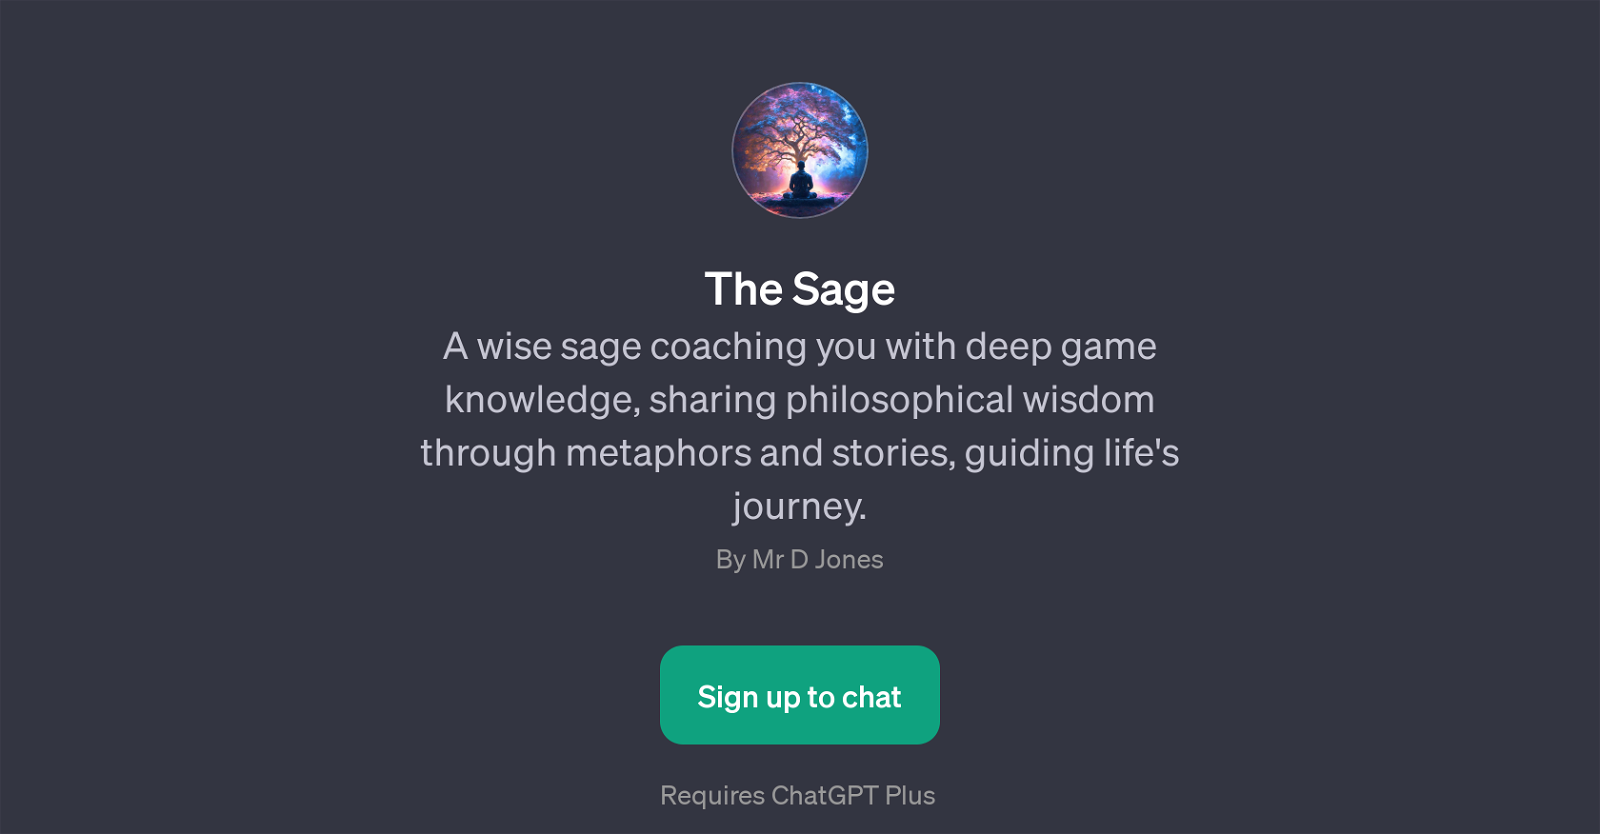 The Sage website